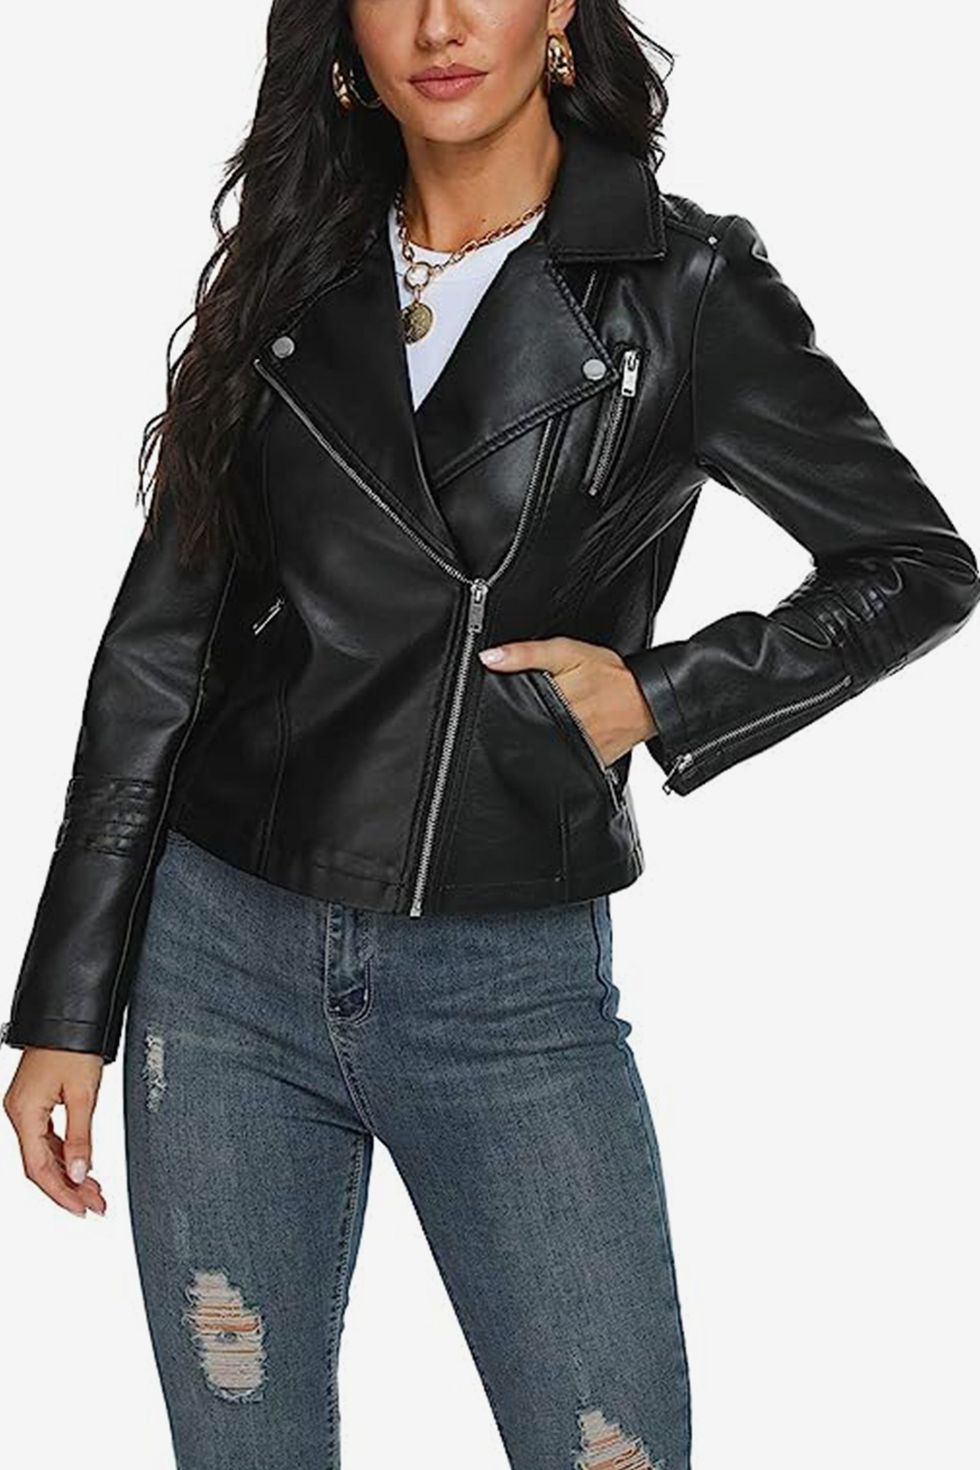 Women's Black Leather Jackets Canada